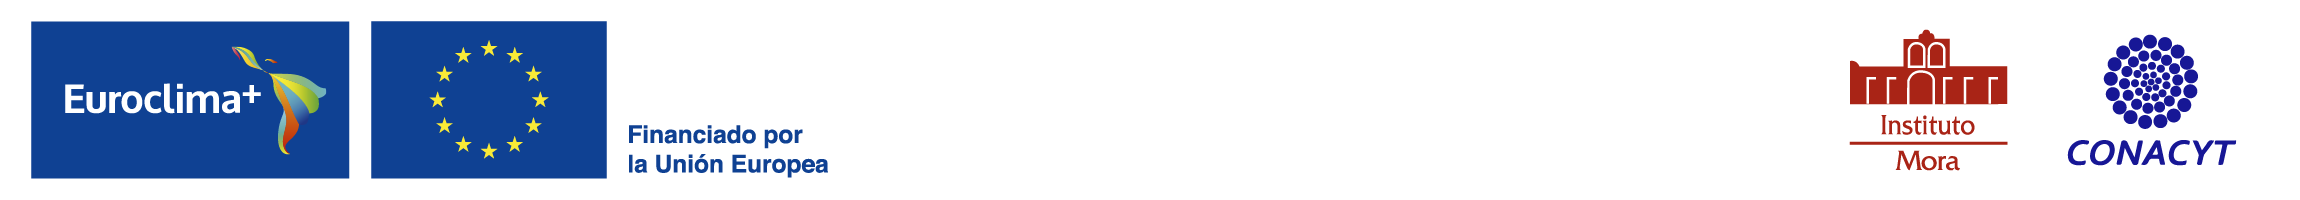 Logo EUROCLIMA plus